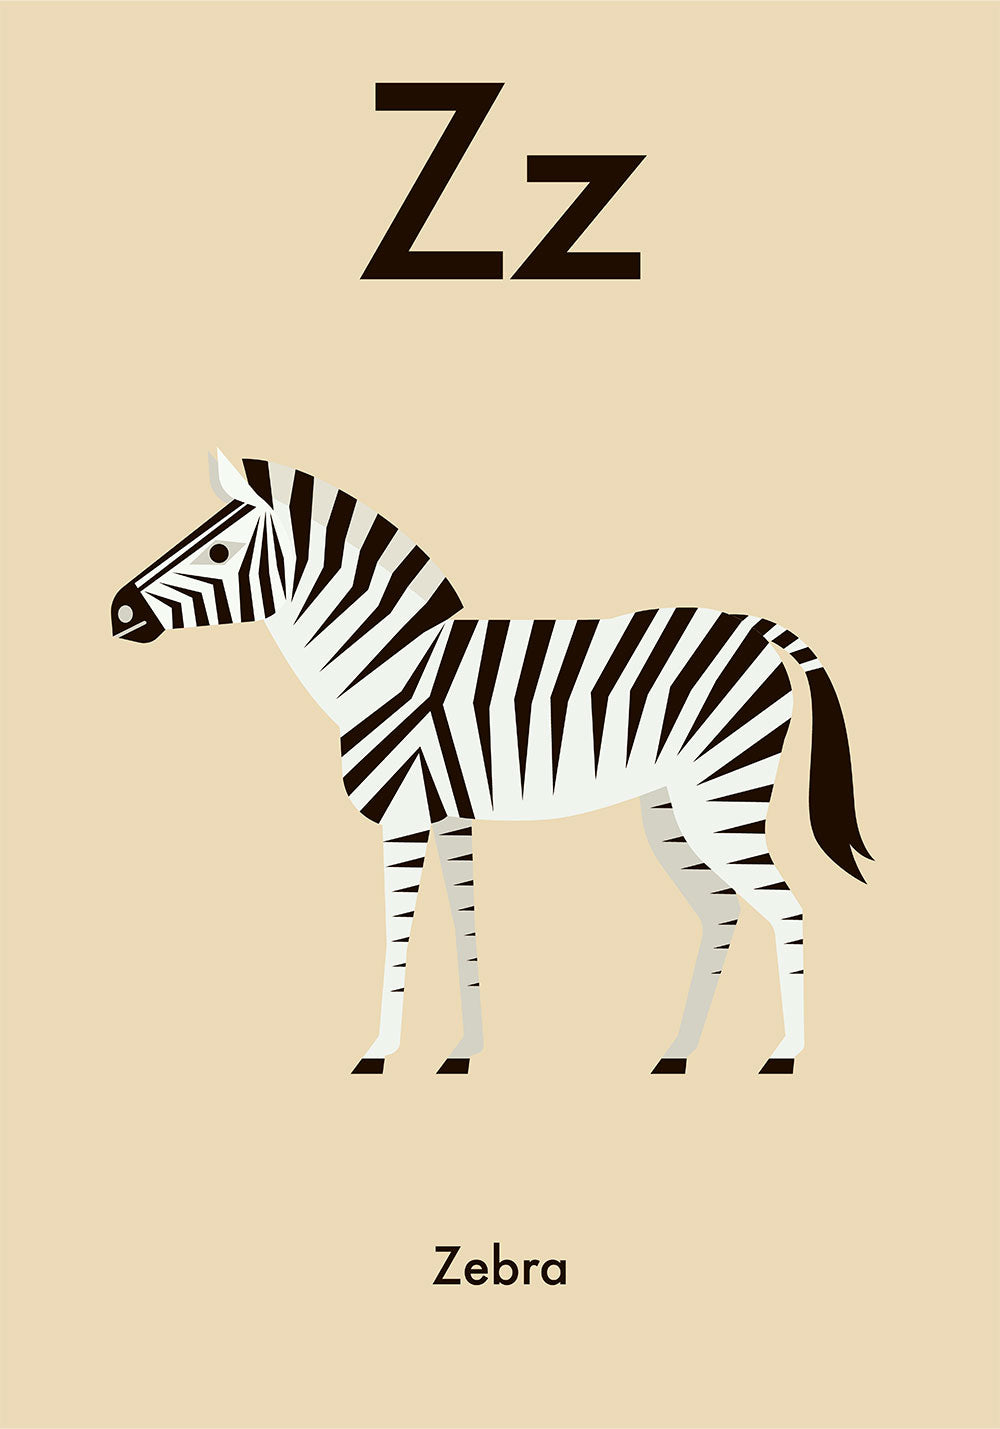 Z for Zebra - Children's Alphabet Poster in German and English